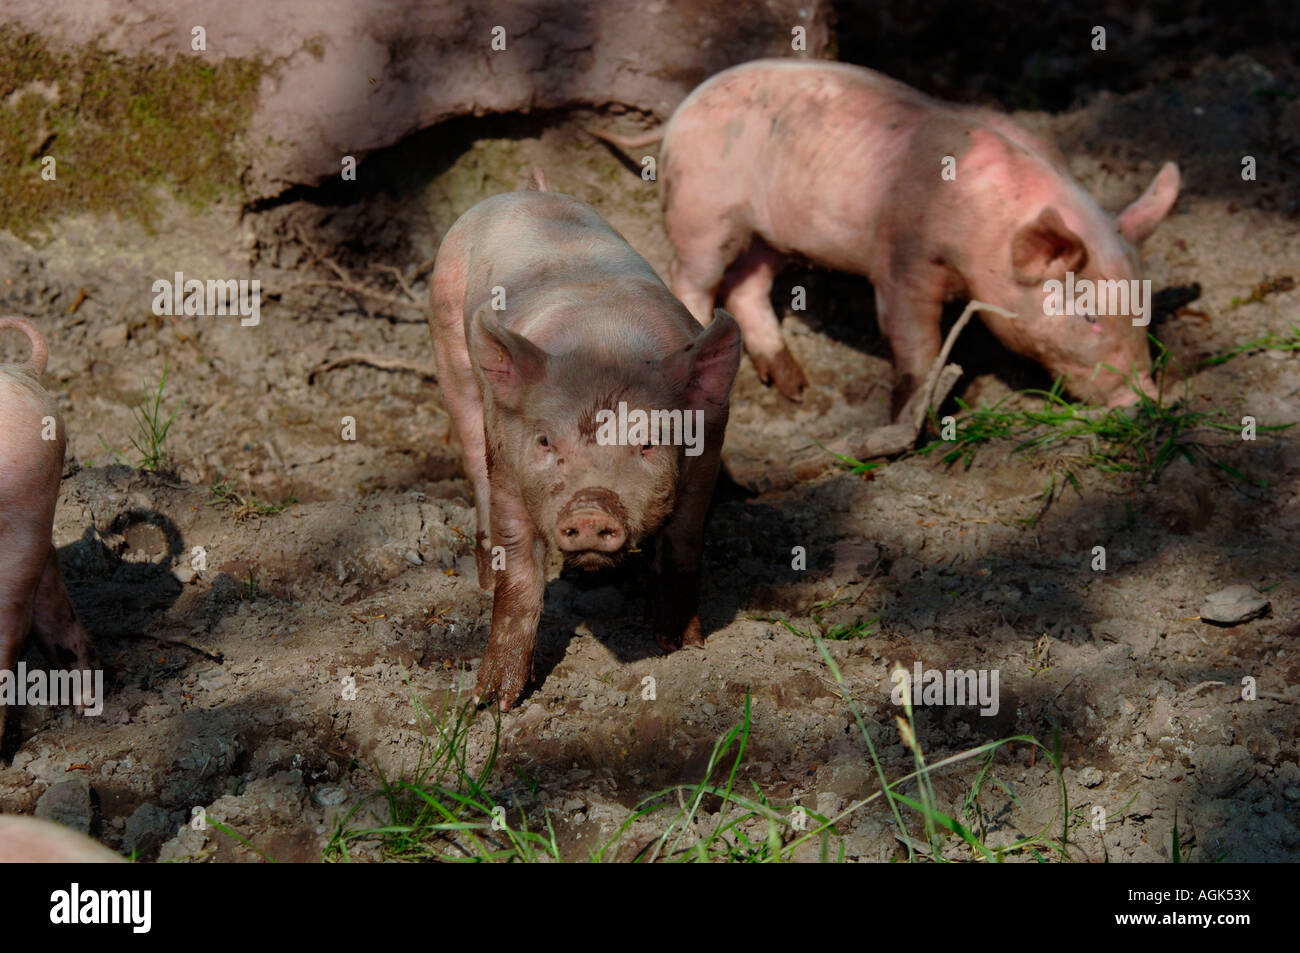 Piglets. Stock Photo